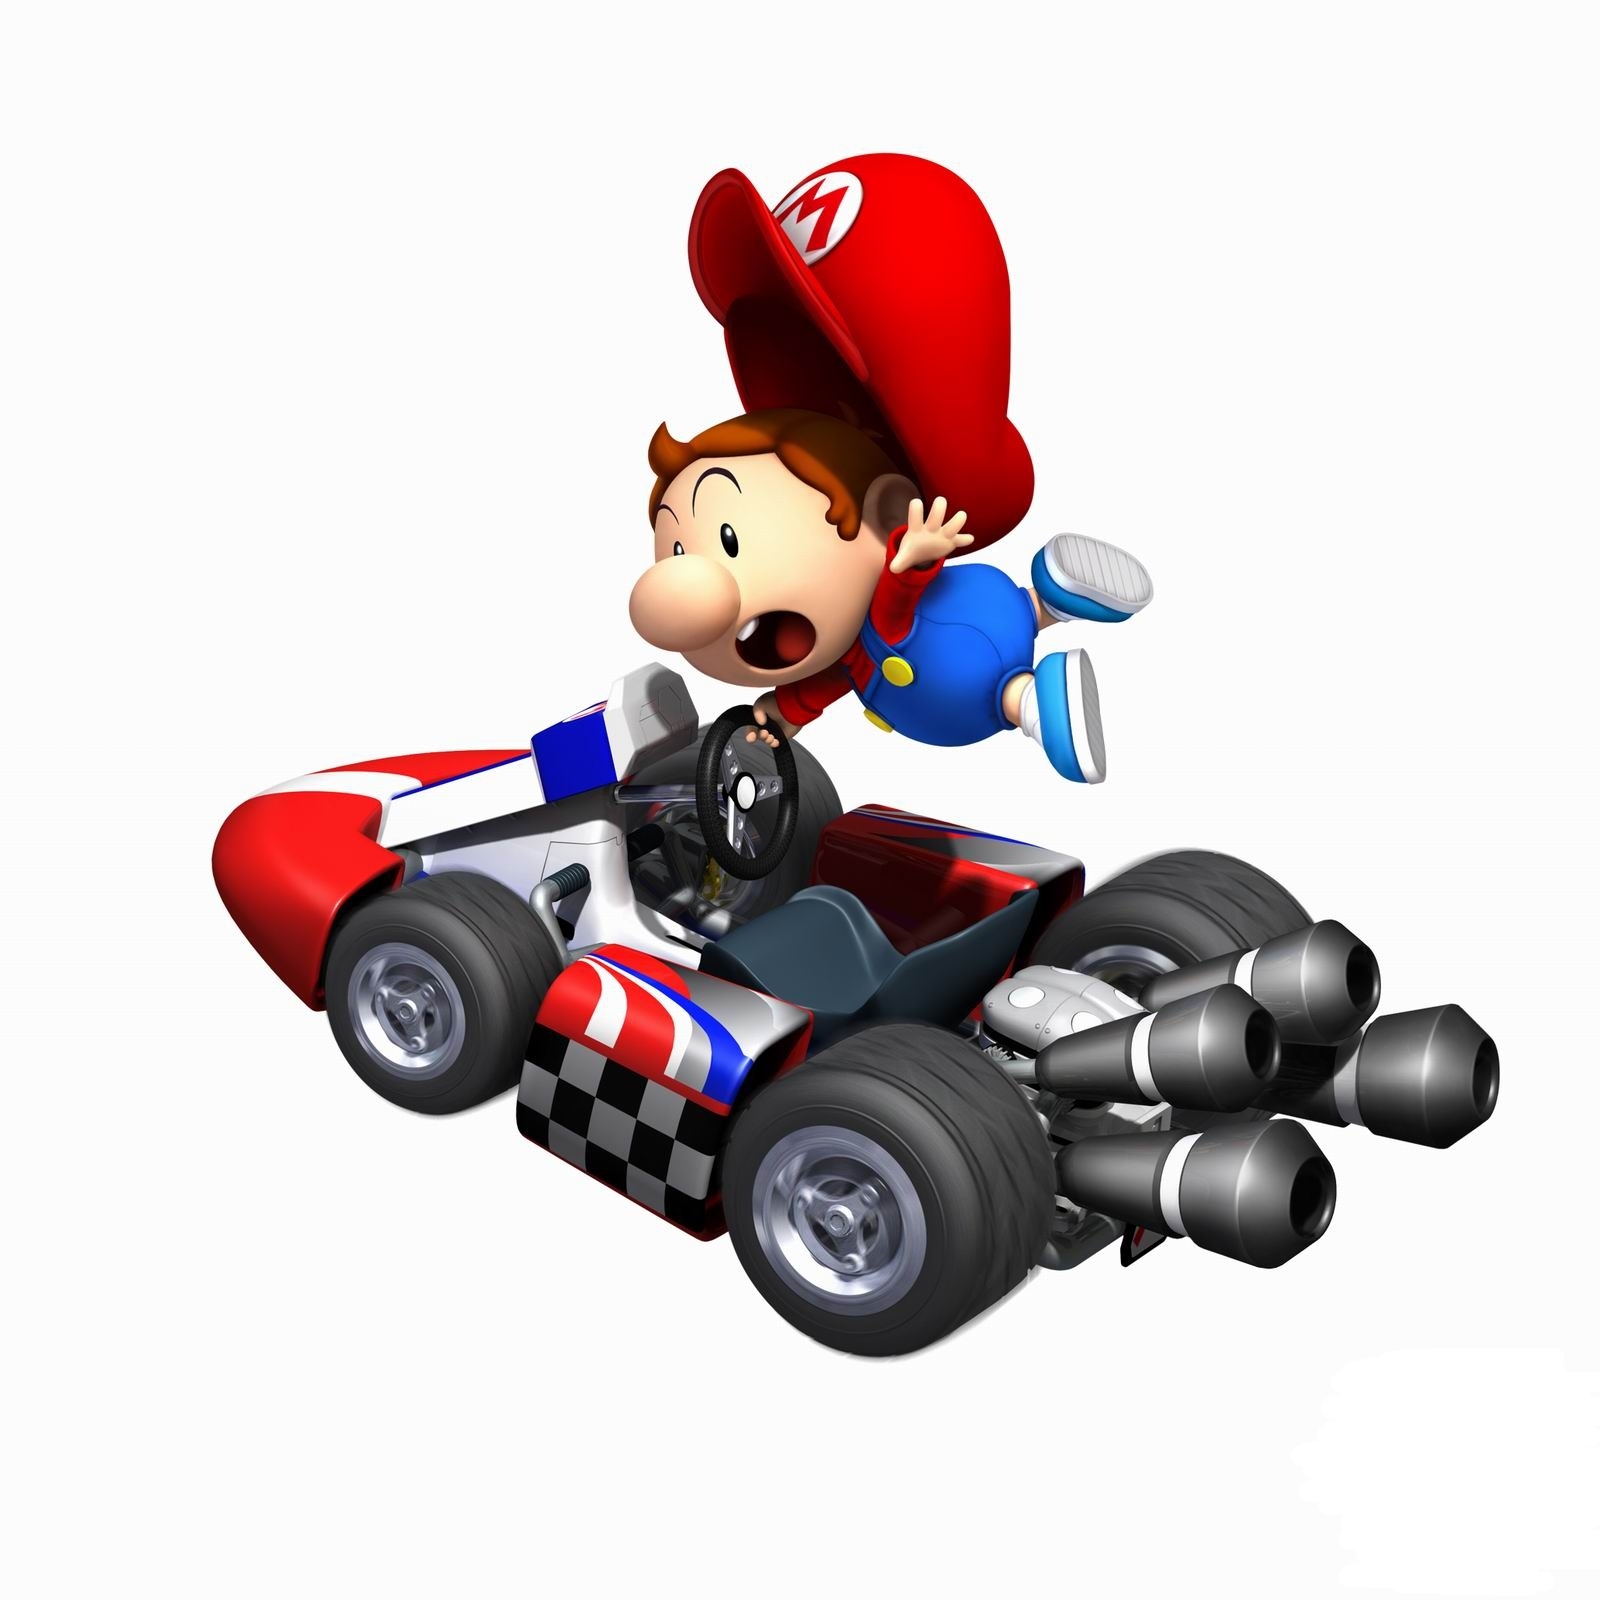 Standard Kart S Mario Kart Racing Wiki Fandom Powered By Wikia 4637